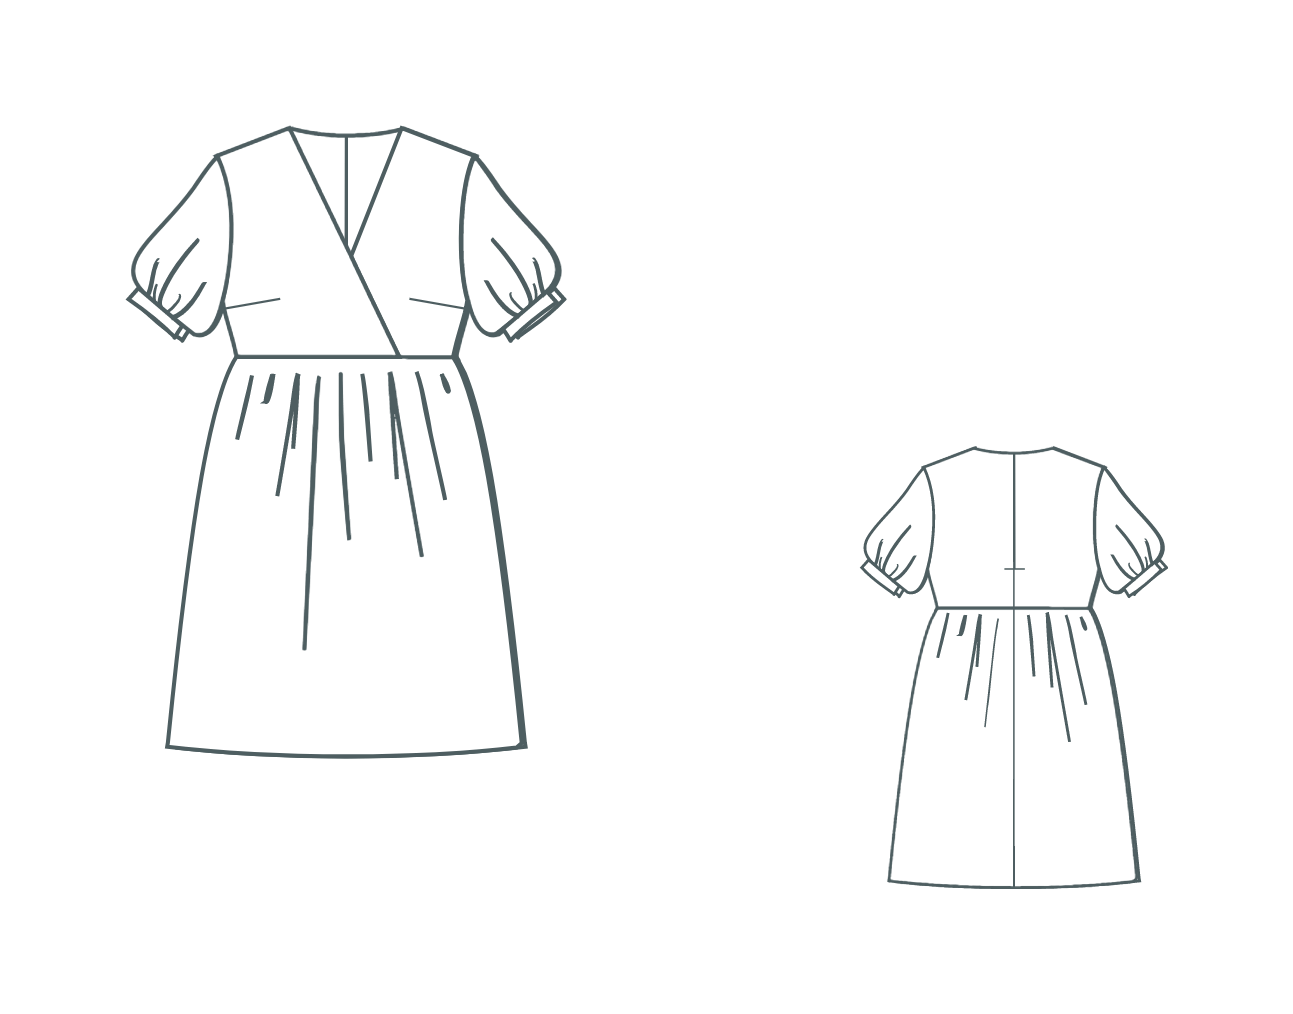 Digitāla piegrieztne-kleita Matilde